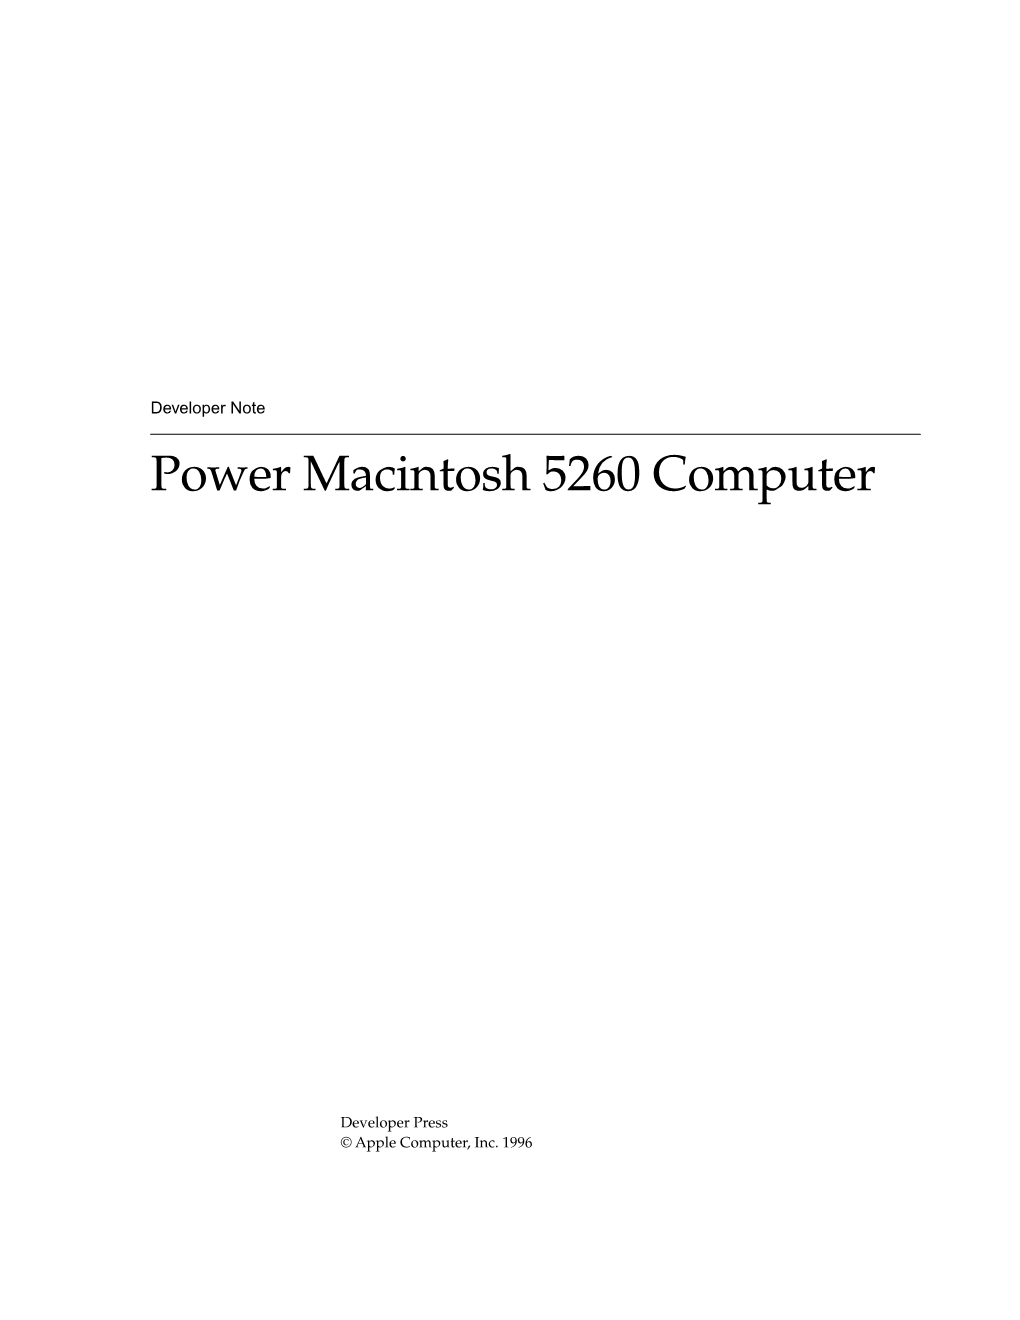 Power Macintosh 5260 Computer Developer Note